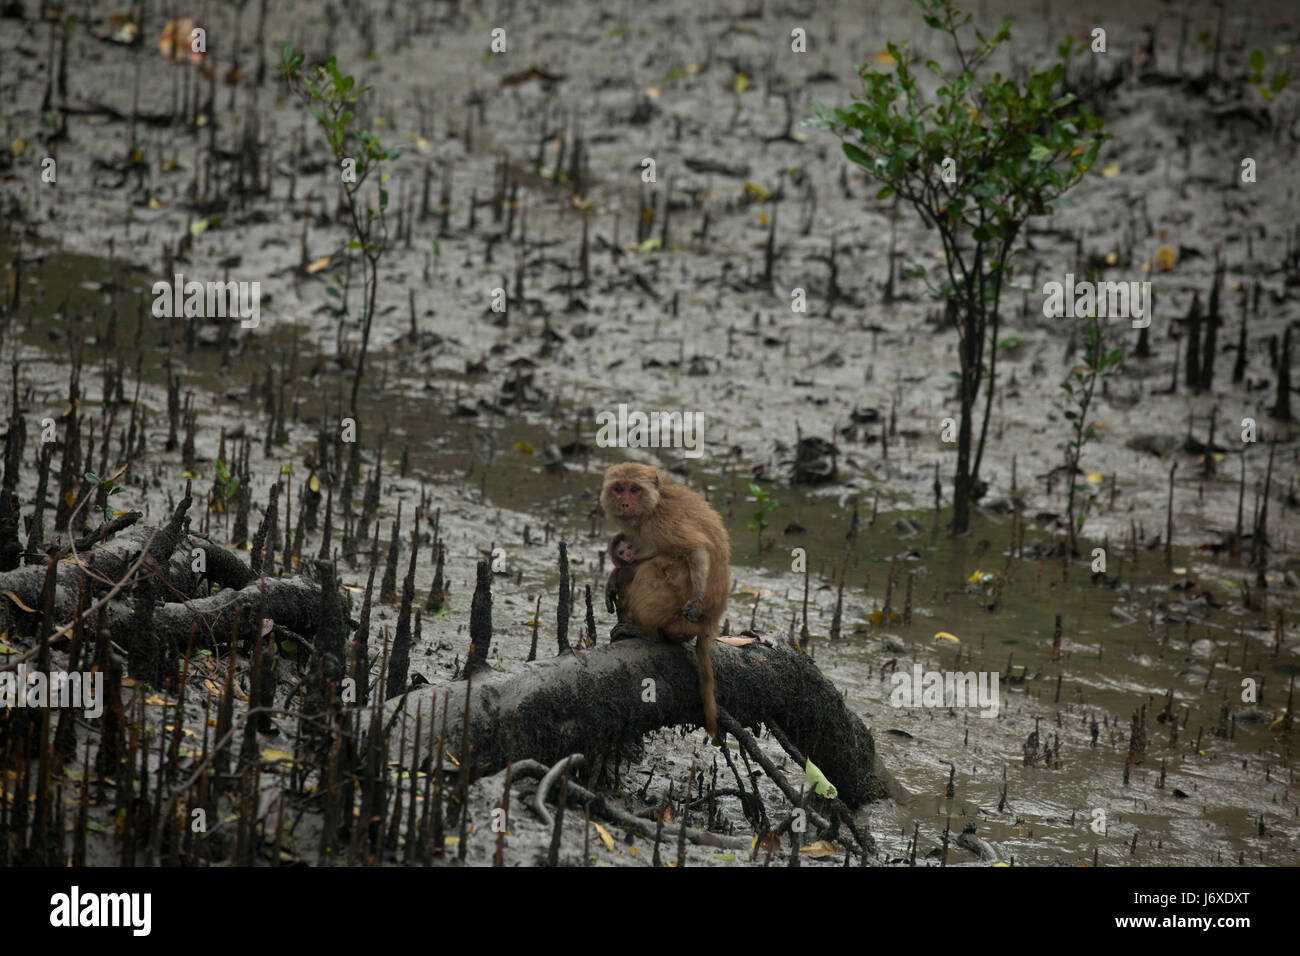 Rhesus monkey at the Kolagachia Eco Tourism Centre in the Sundarbans, a UNESCO World Heritage Site and a wildlife sanctuary. Satkhira, Bangladesh Stock Photo